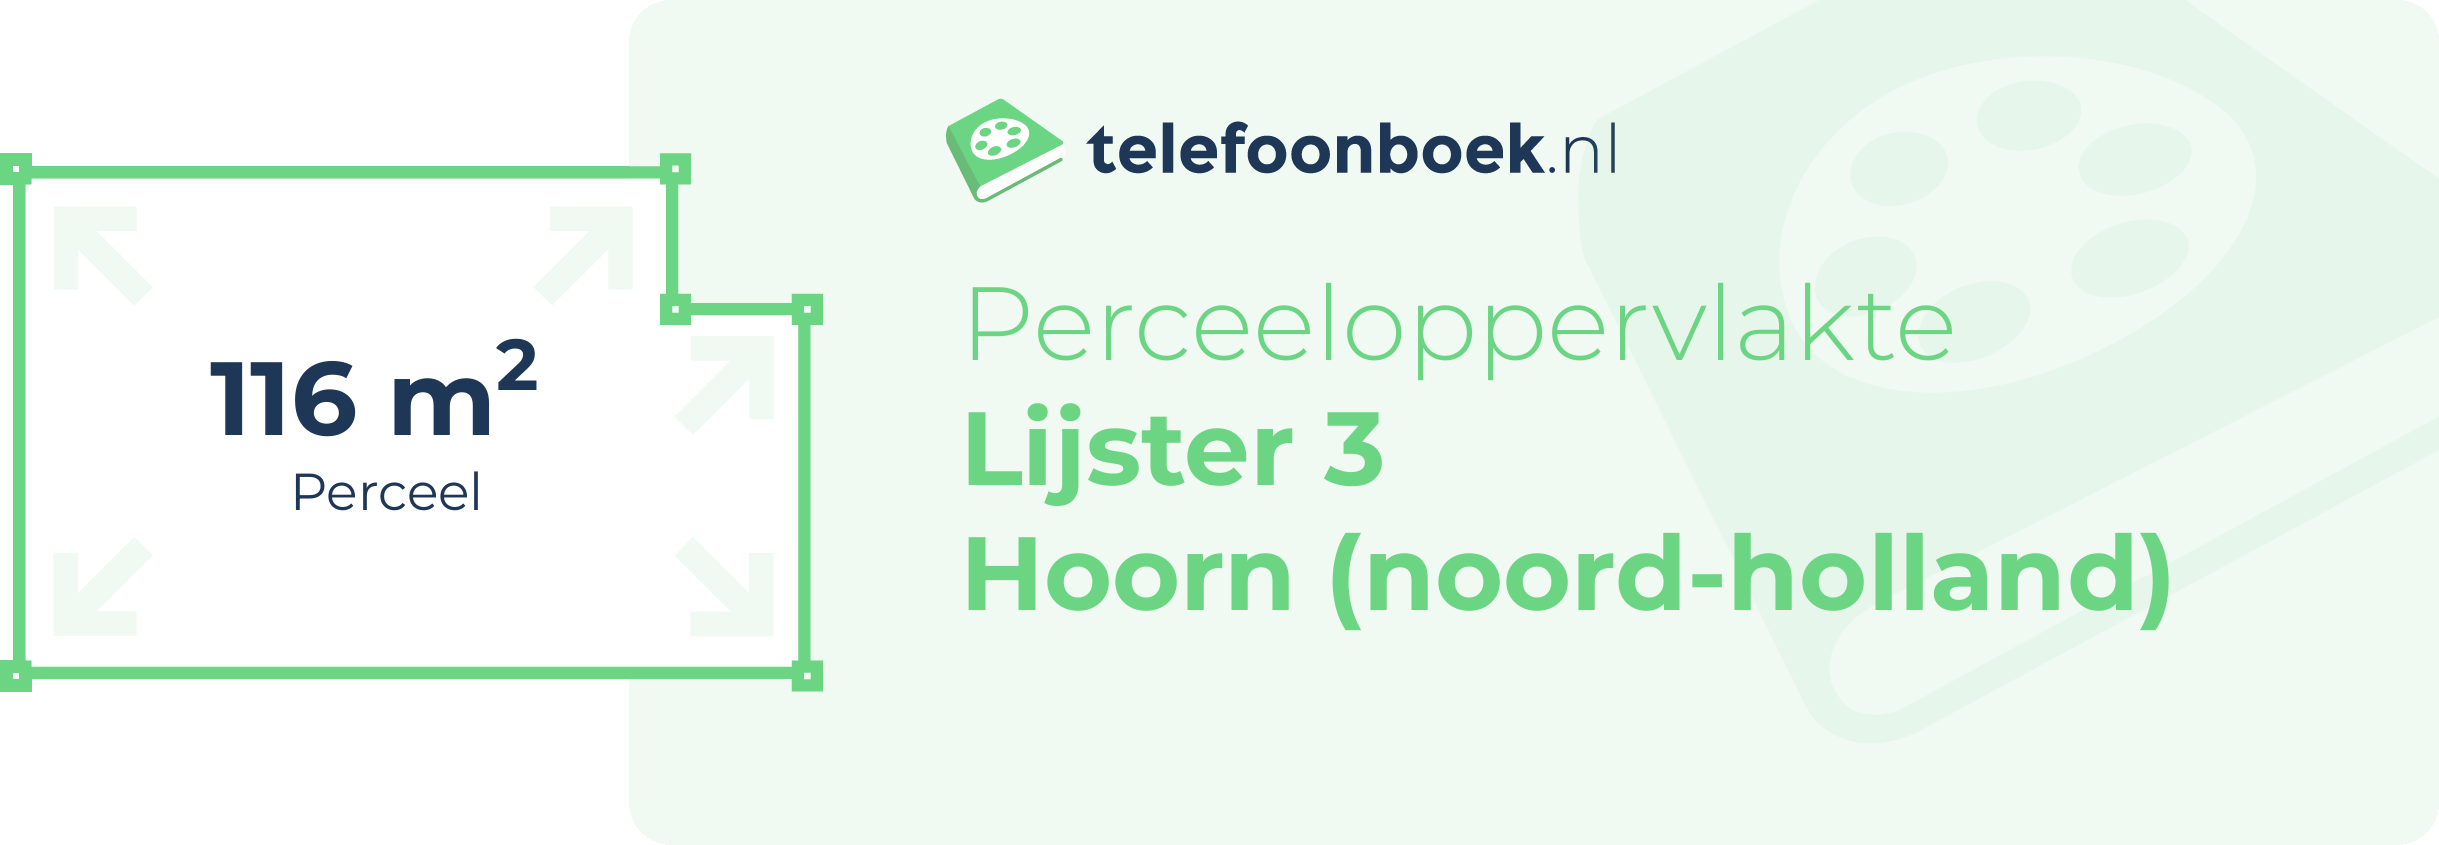 Perceeloppervlakte Lijster 3 Hoorn (Noord-Holland)